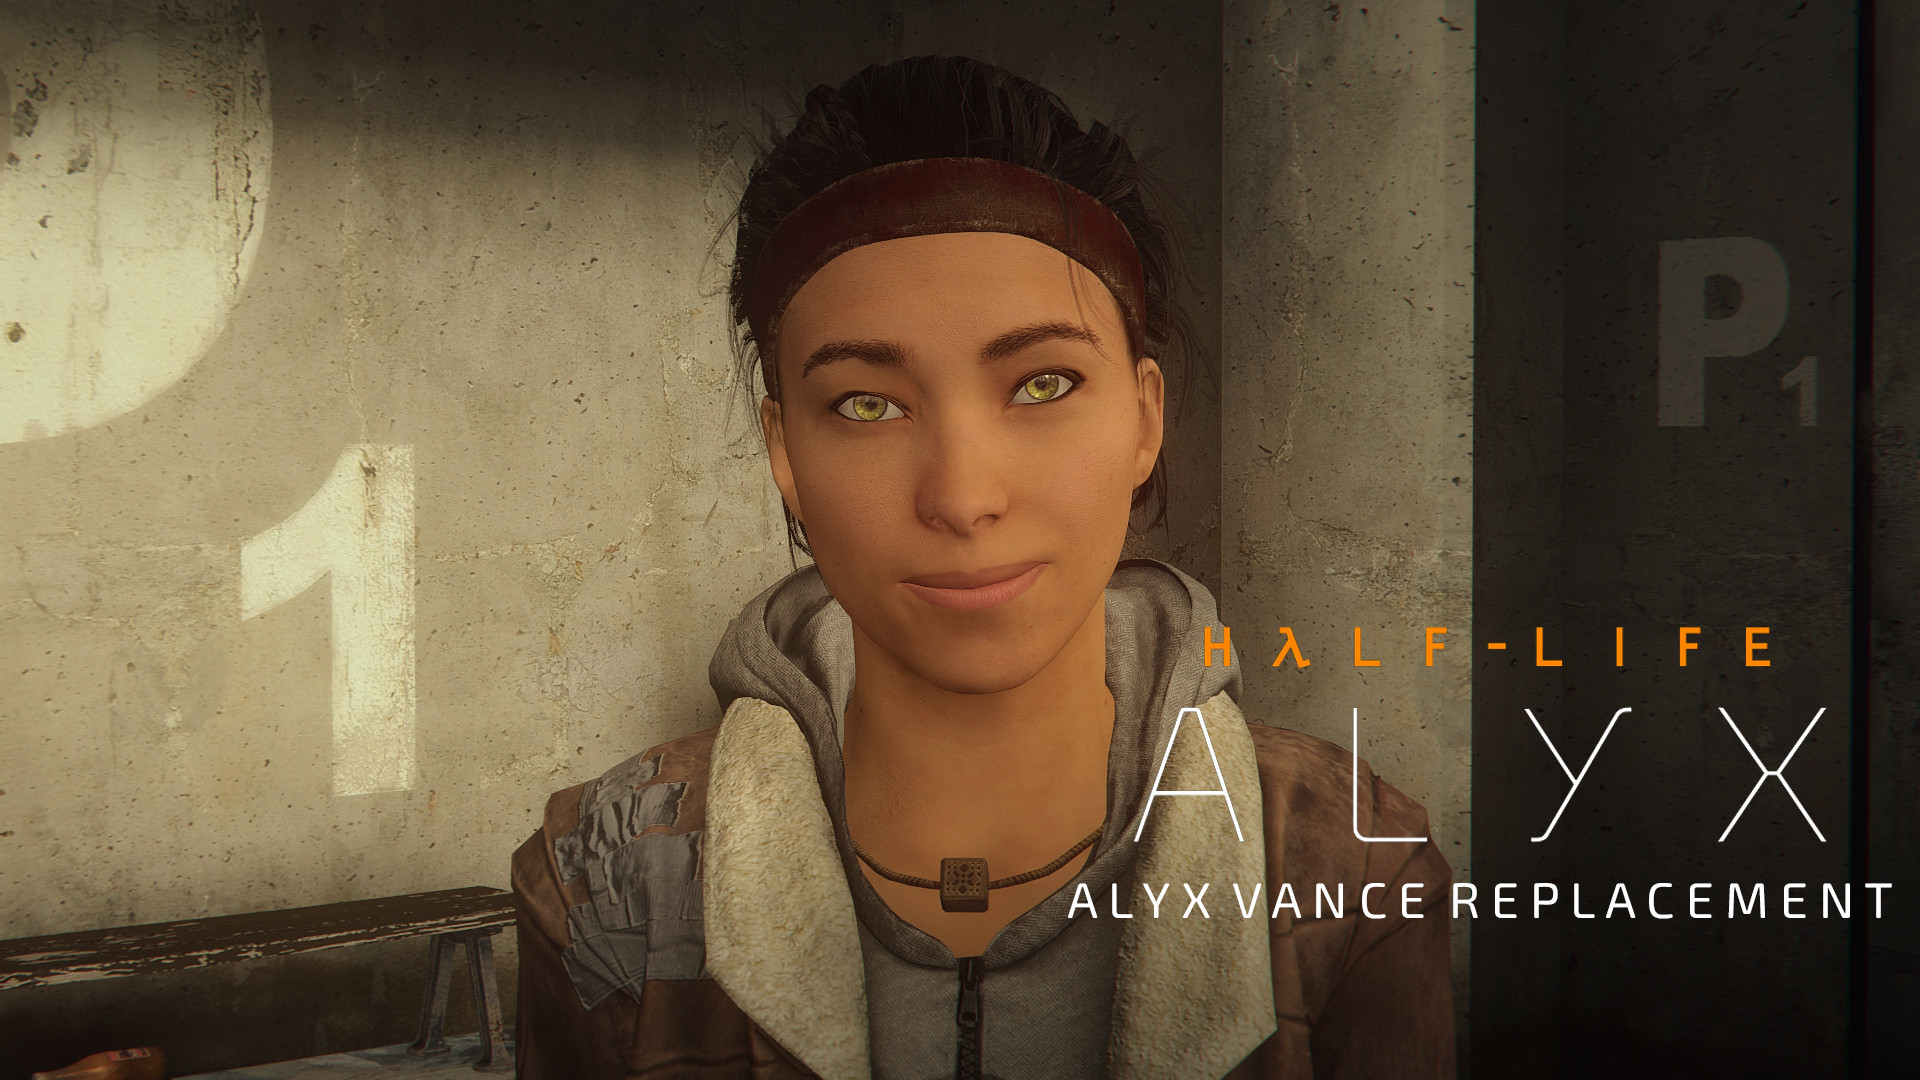 Alyx Vance from Half-Life 2